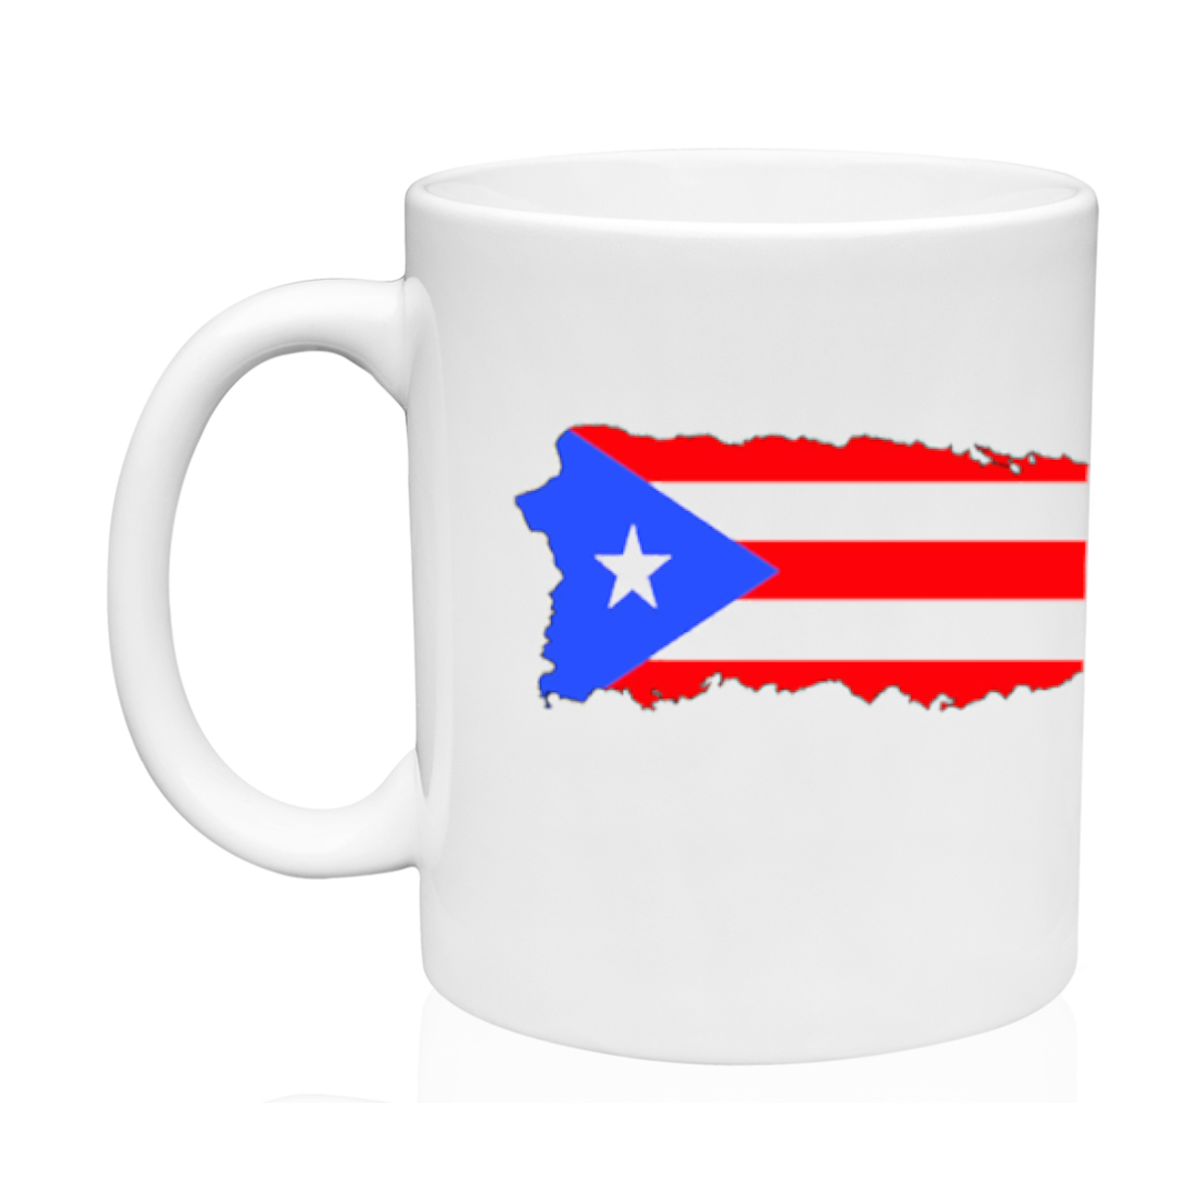 AGAD Puerto Rico (Mapa PR Ceramic Mug)